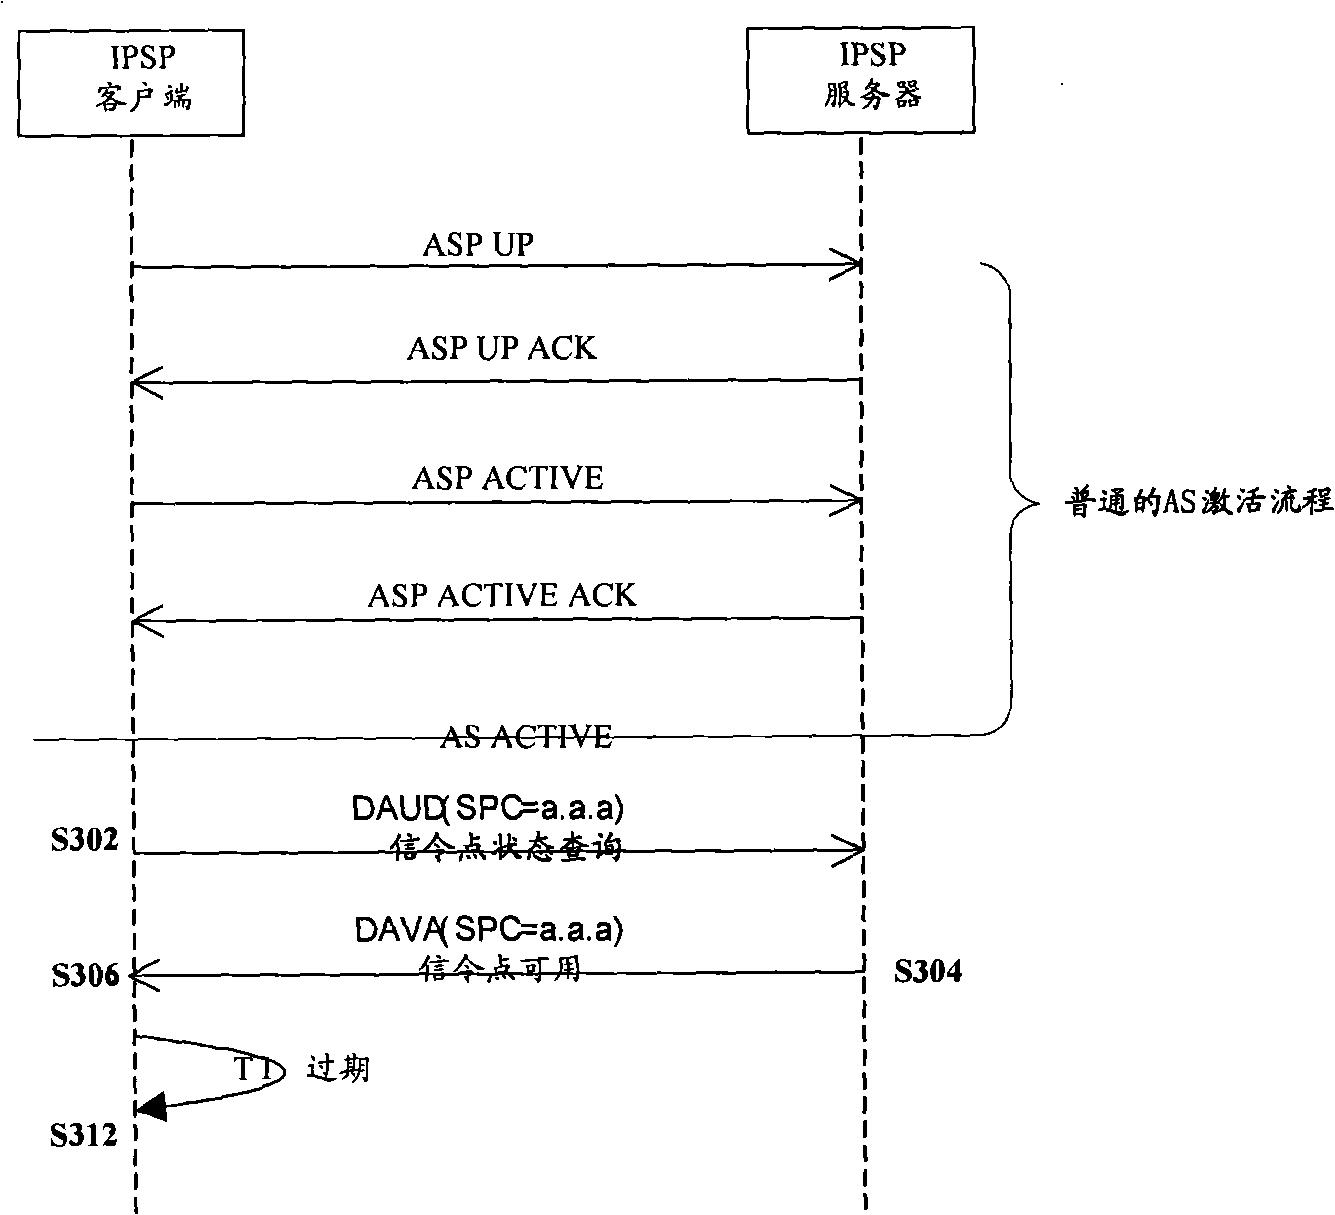 Method for raising reliability of M3UA signaling route